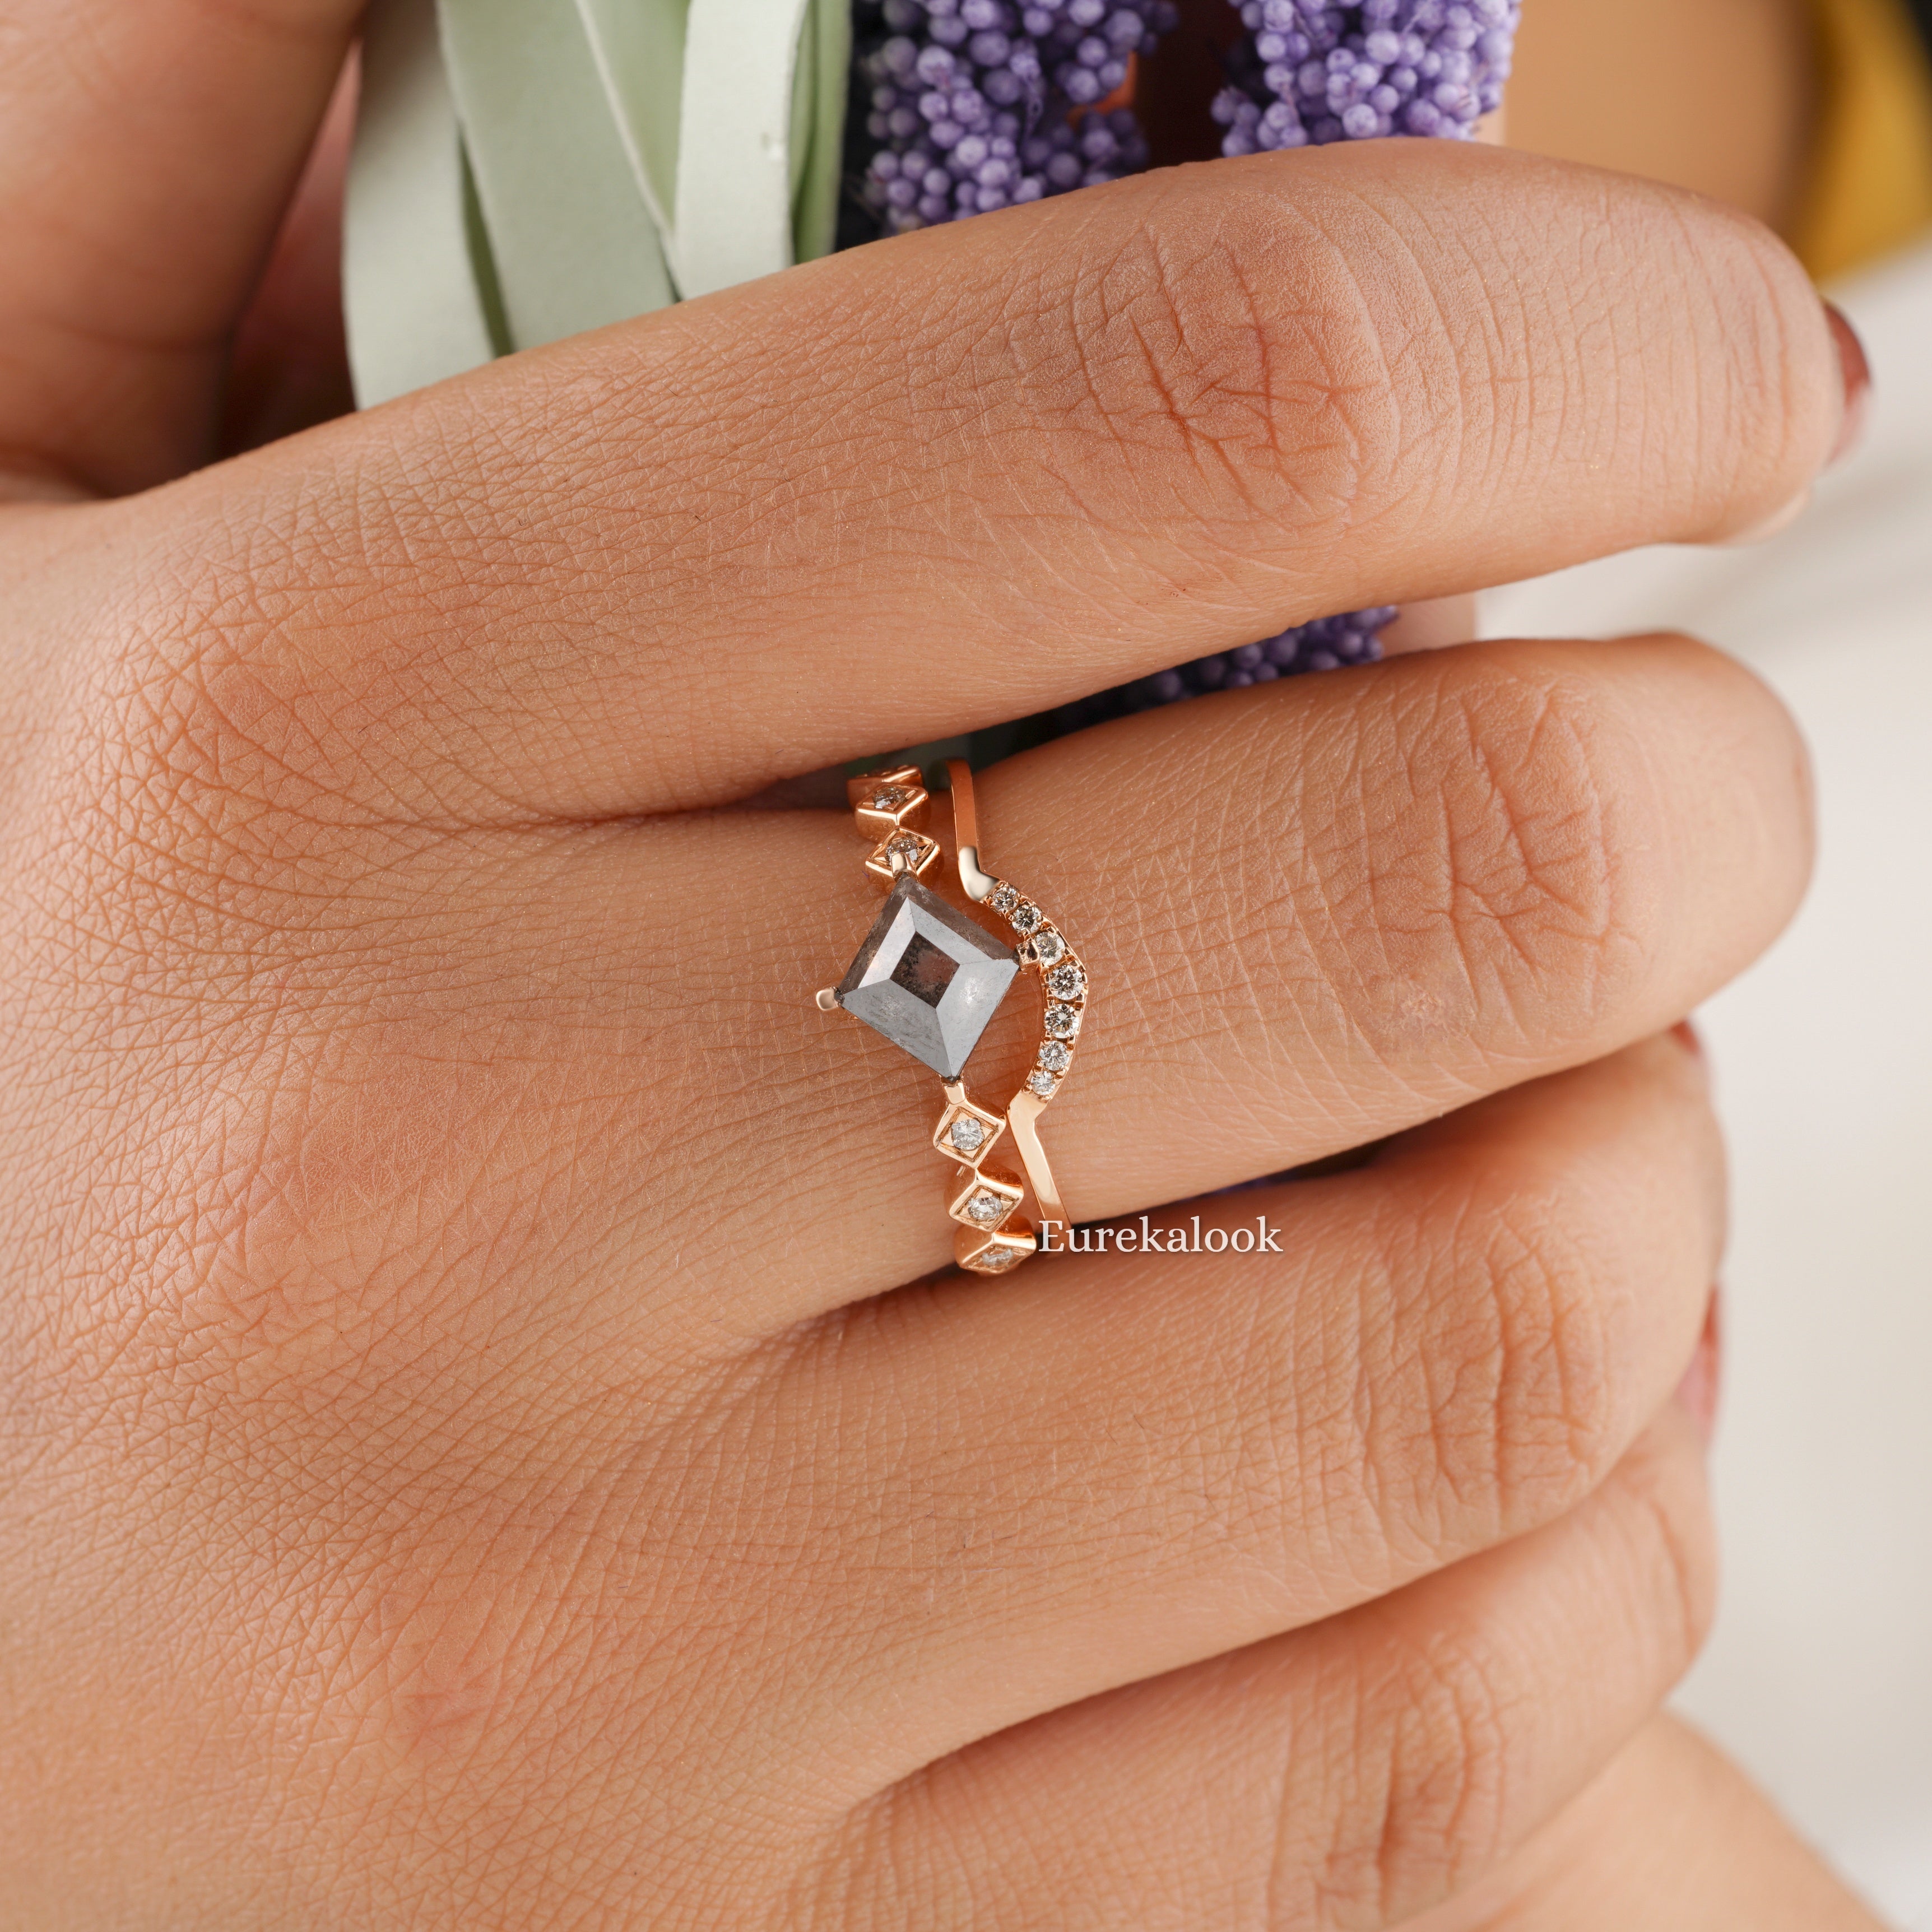 Art Deco Kite Cut Diamond Wedding Ring Set - Eurekalook